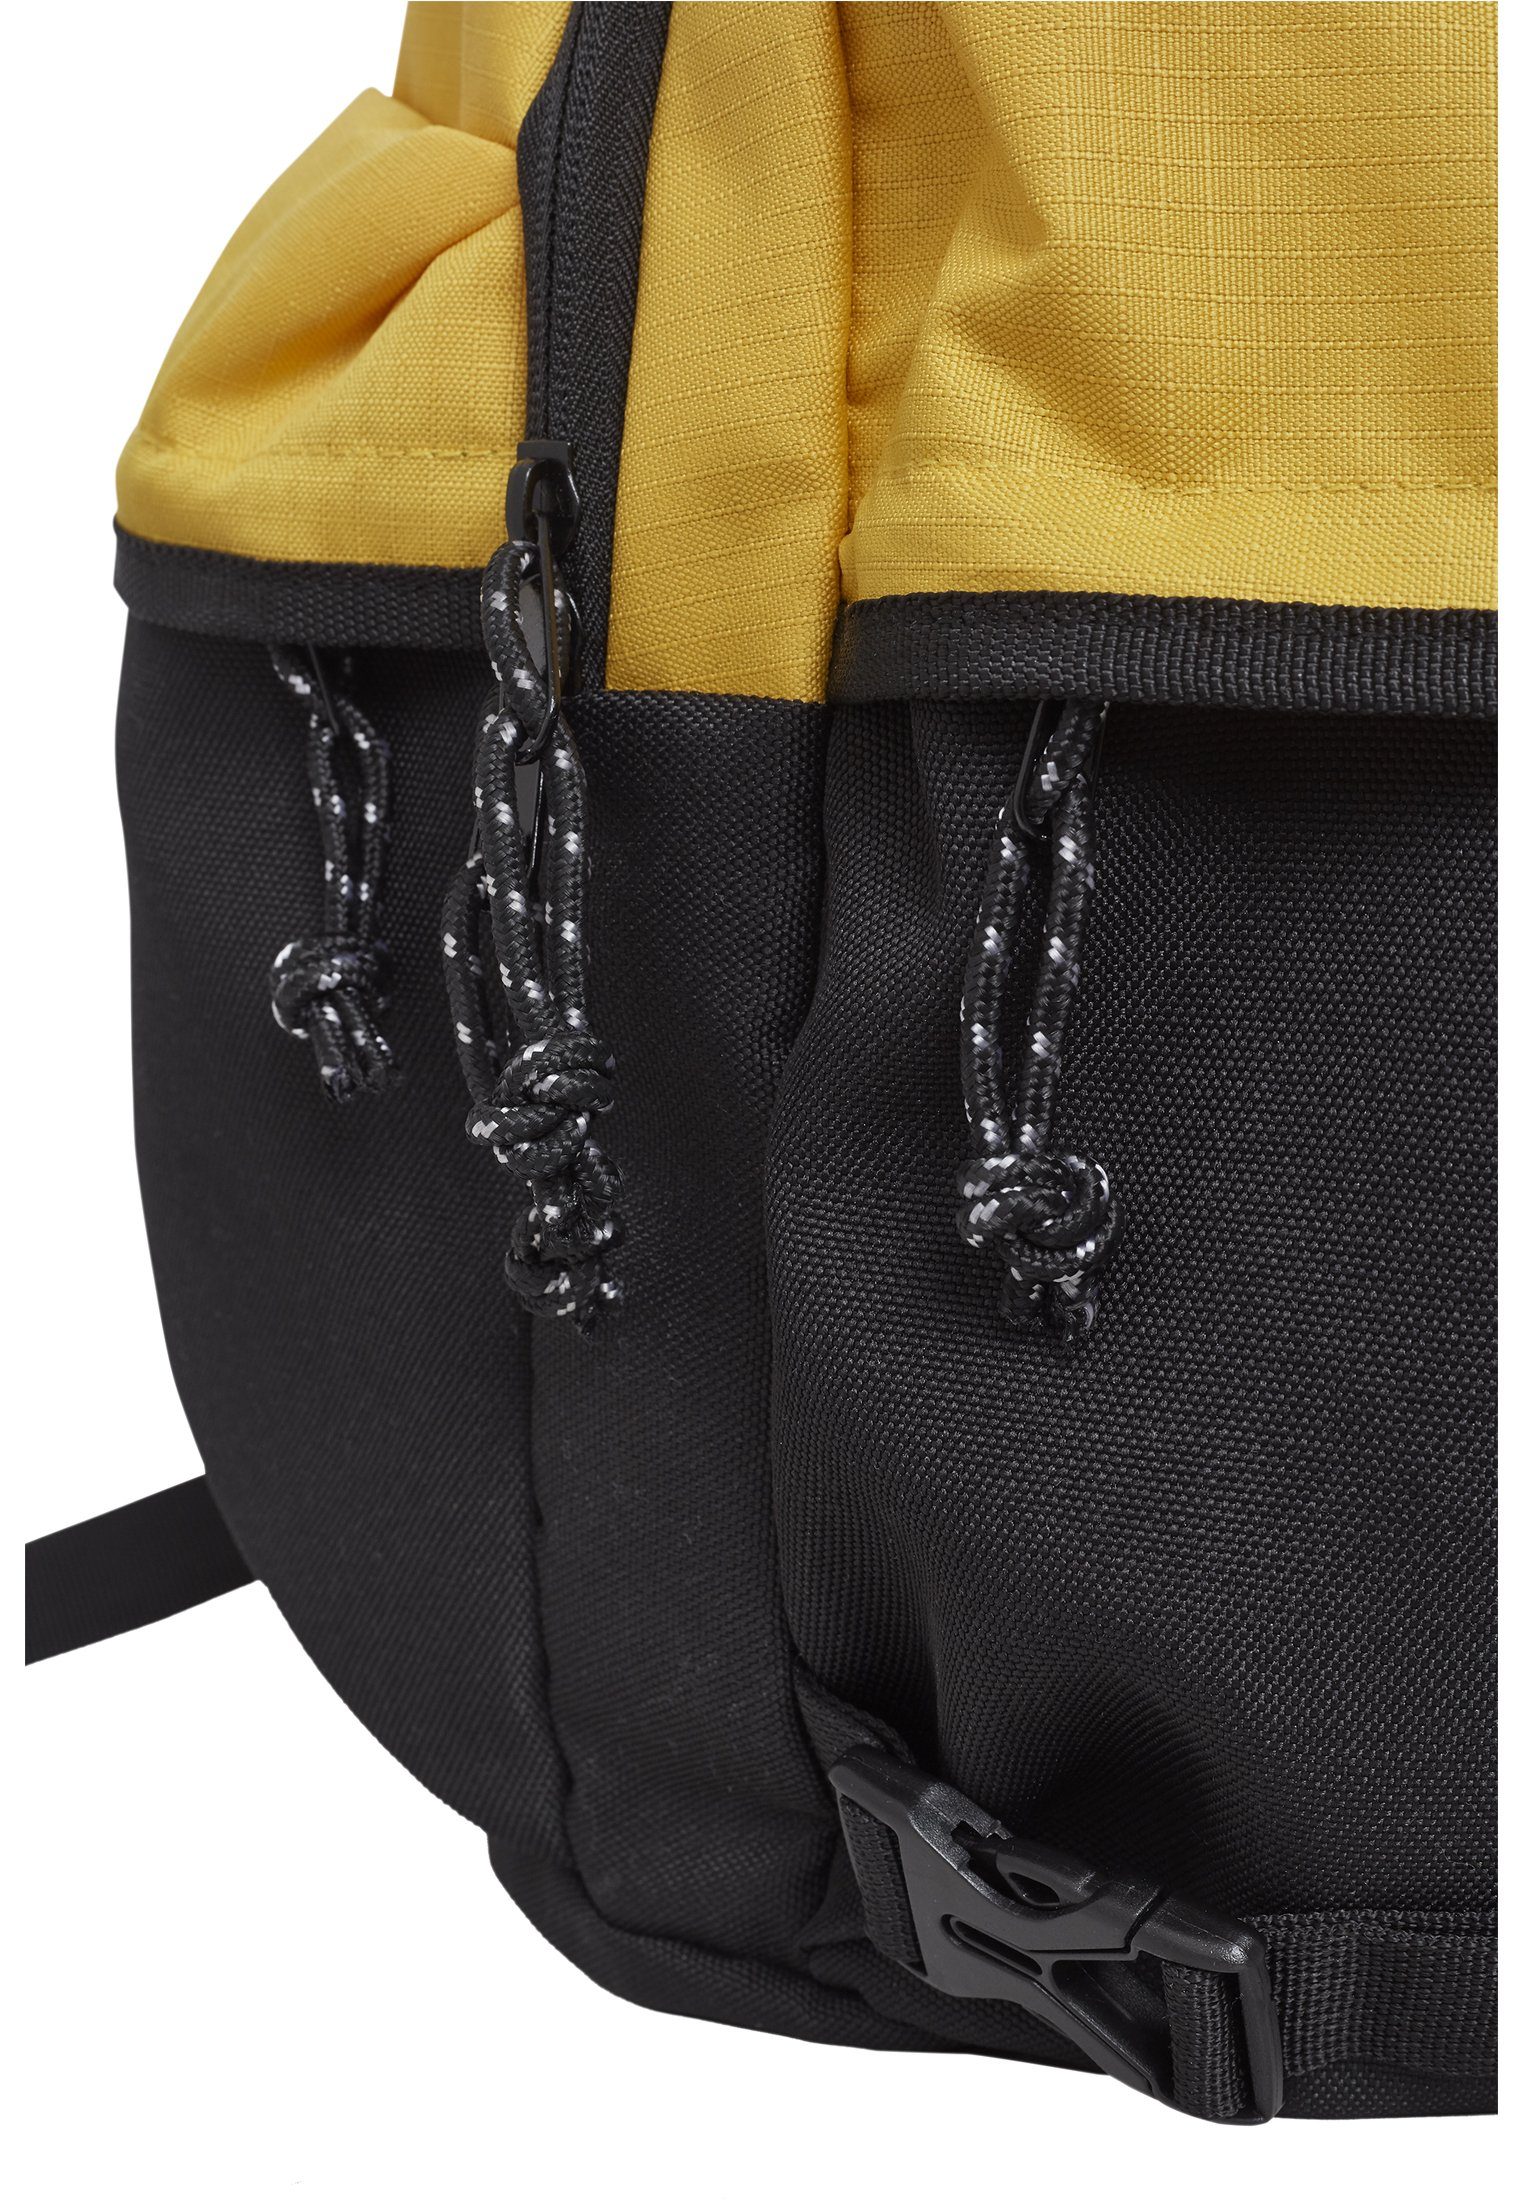 Unisex chrome CLASSICS URBAN Colourblocking yellow/black/black Backpack Rucksack